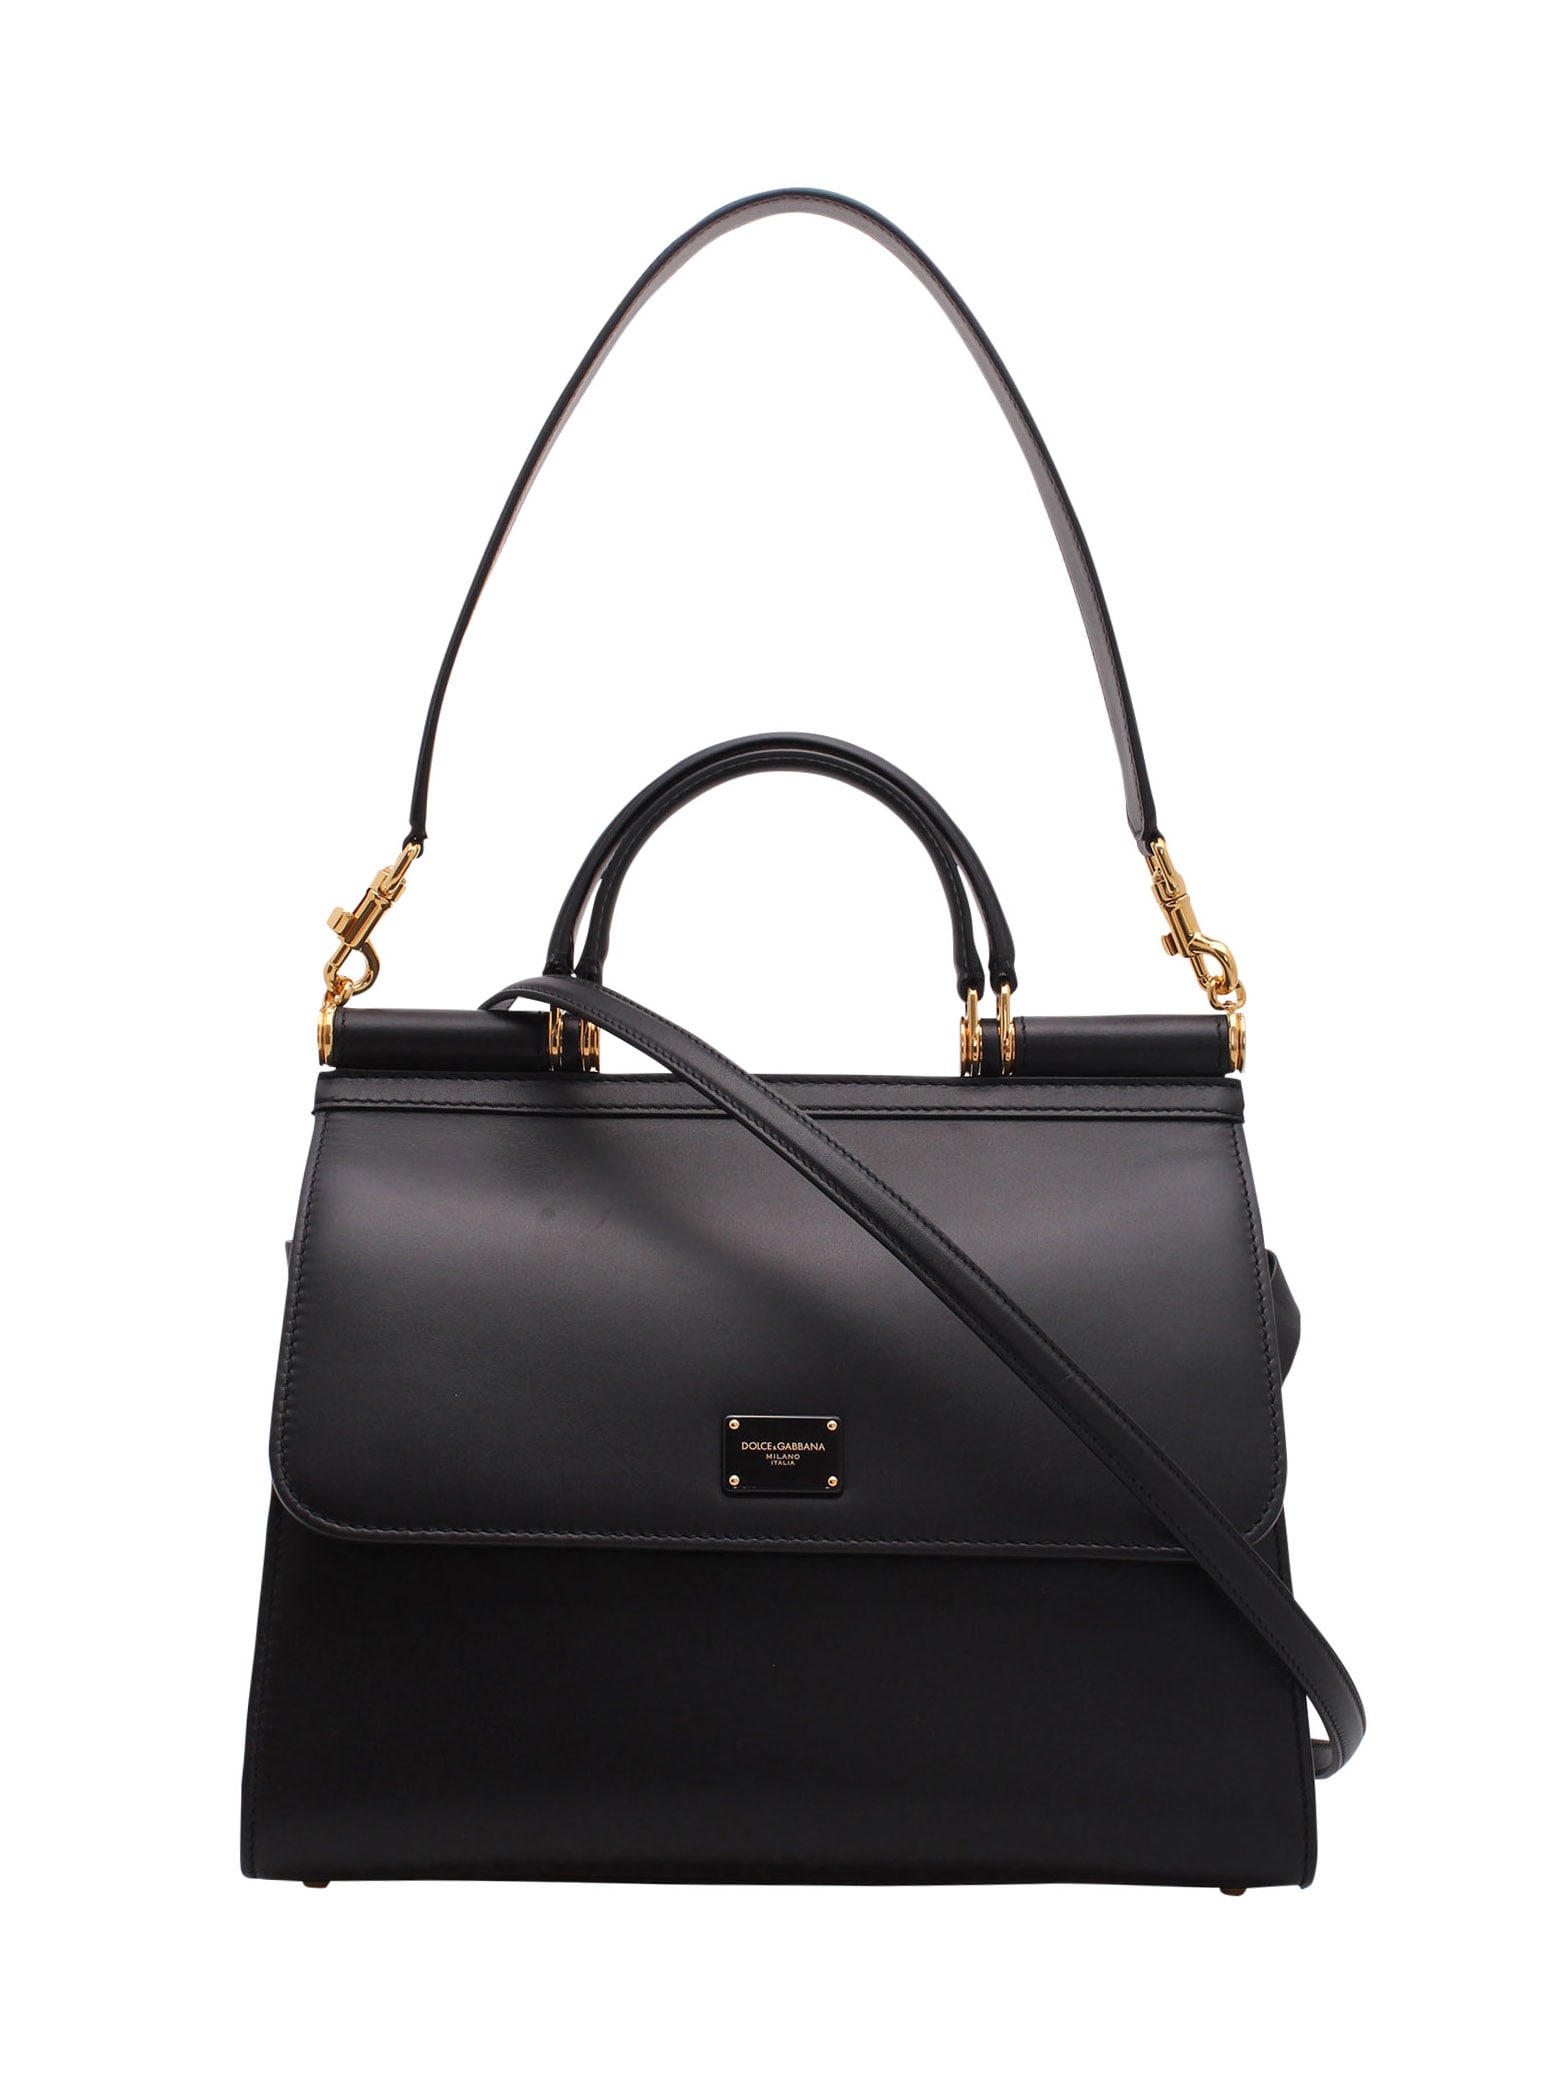 Dolce & Gabbana Leather Bag In Black